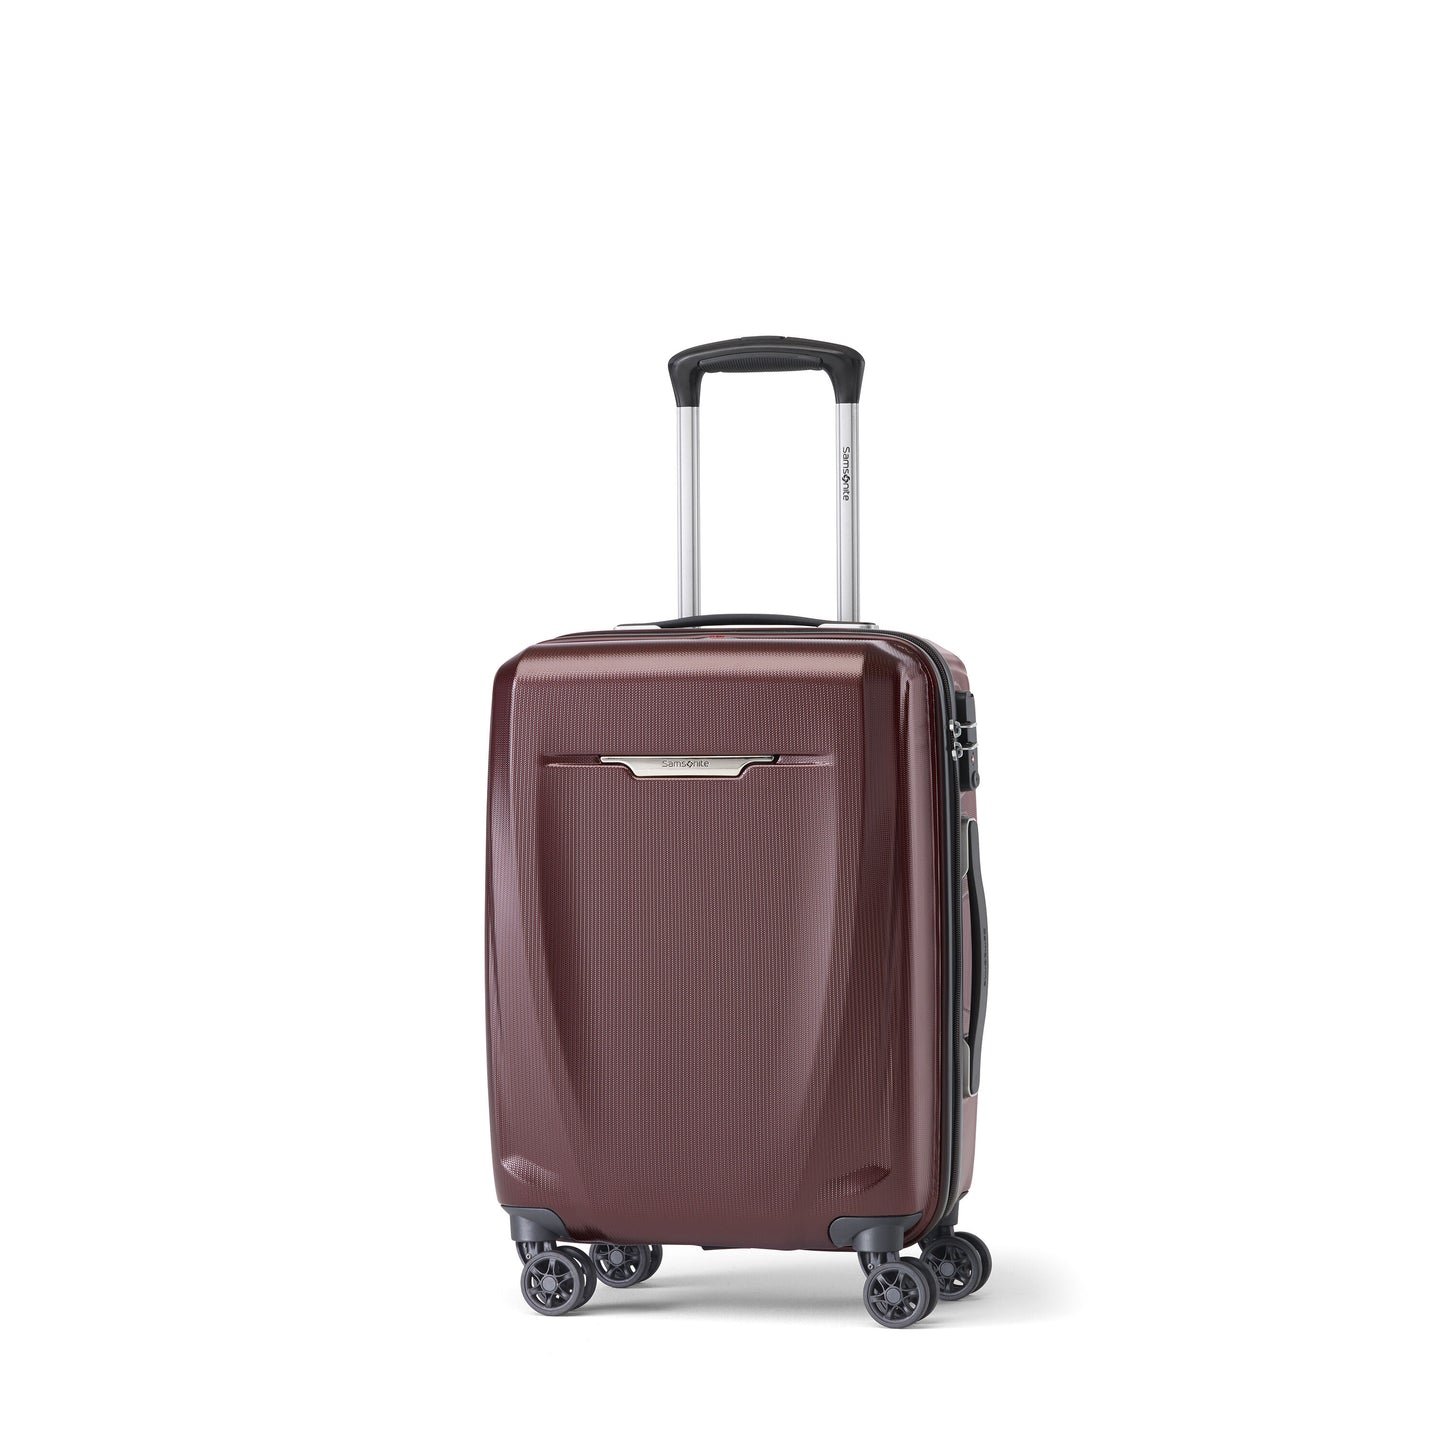 Samsonite Pursuit DLX Plus Hardside Spinner Suitcase